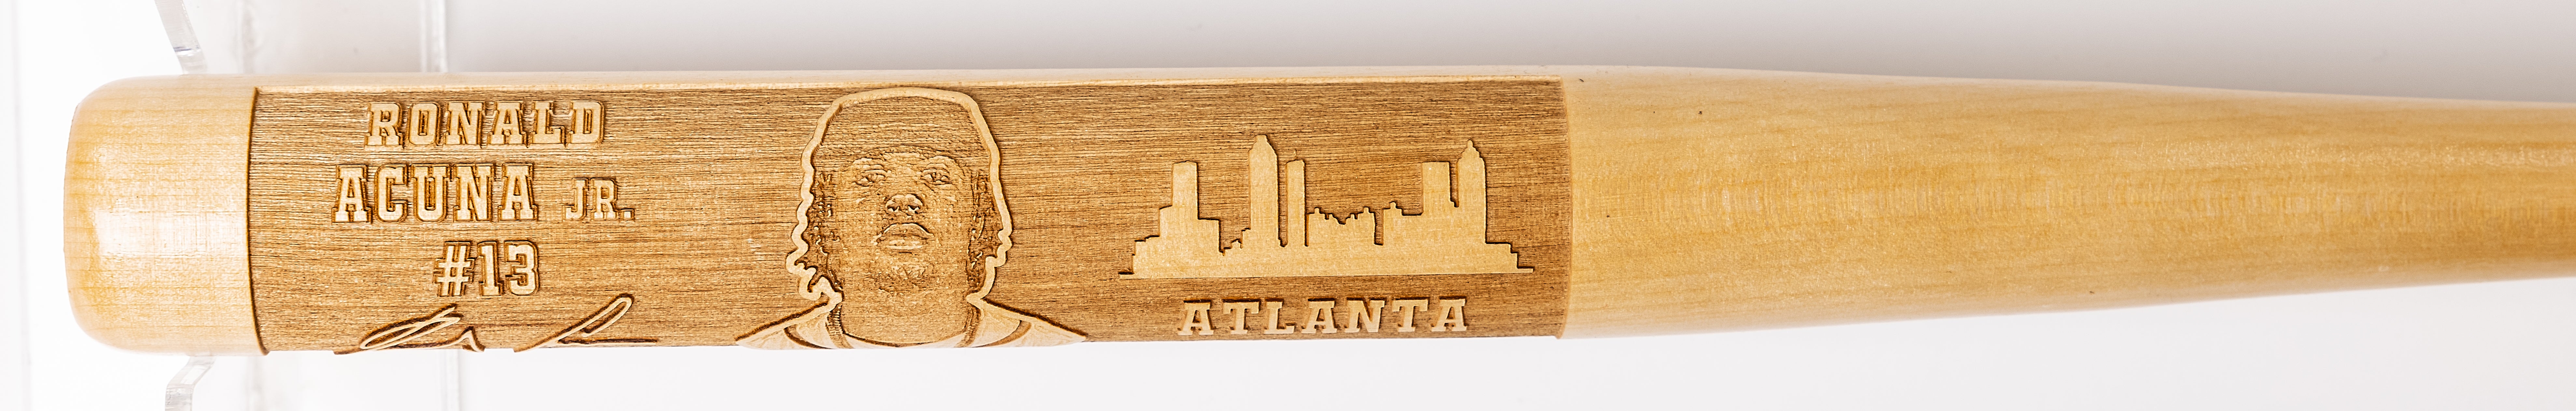 Ronald Acuna Jr. Laser-Engraved Wood Baseball Bat